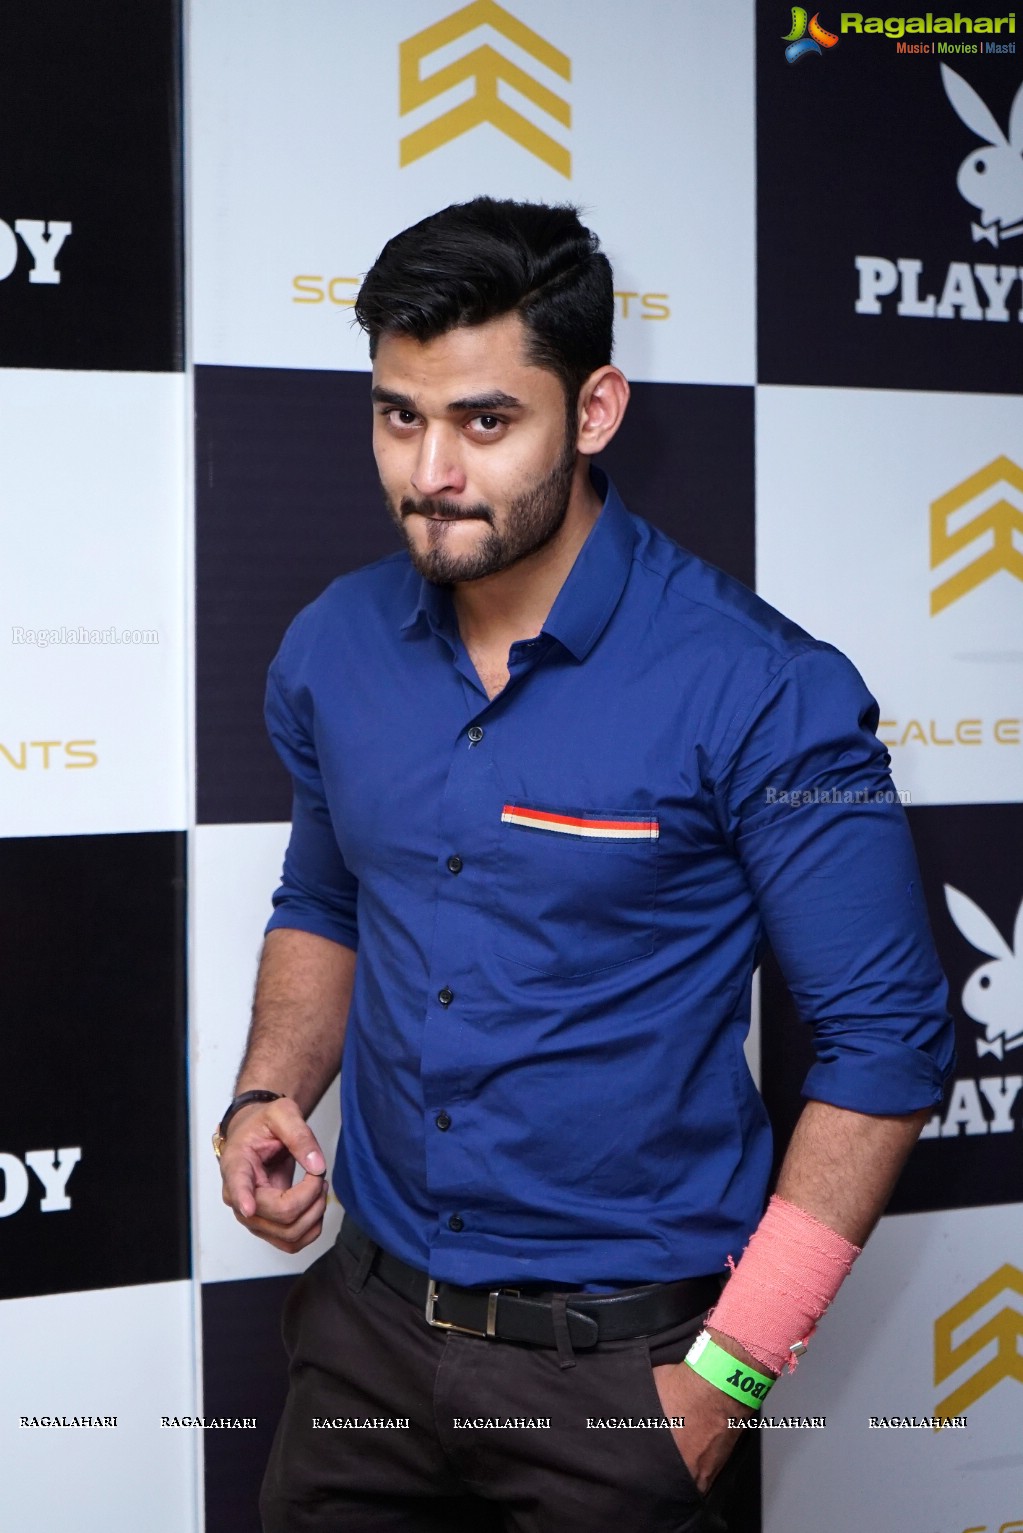 Bollywood Night with DJ Piyush Bajaj at Playboy Club Hyderabad